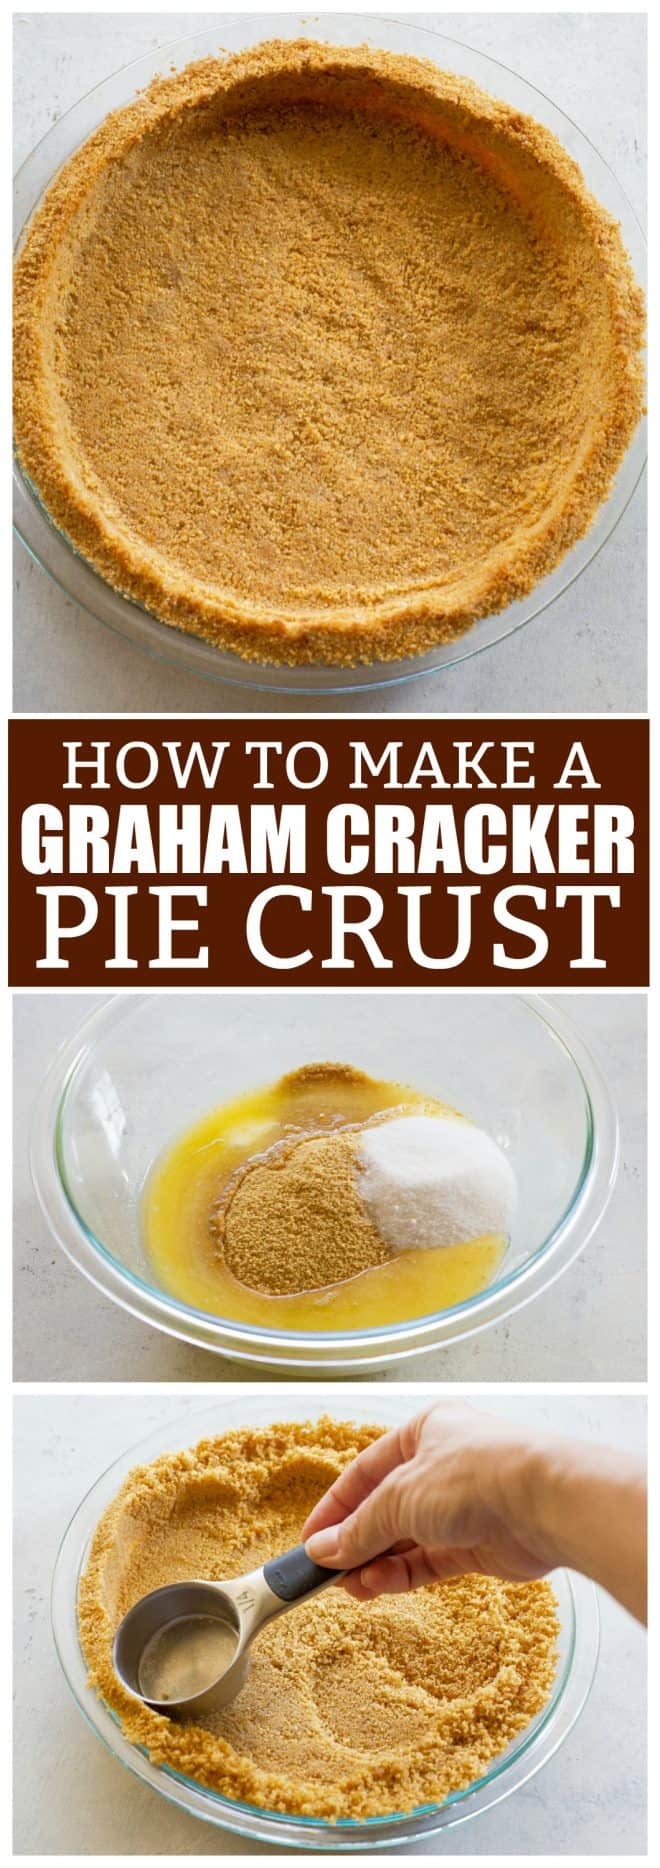 Crosta de Cracker Graham